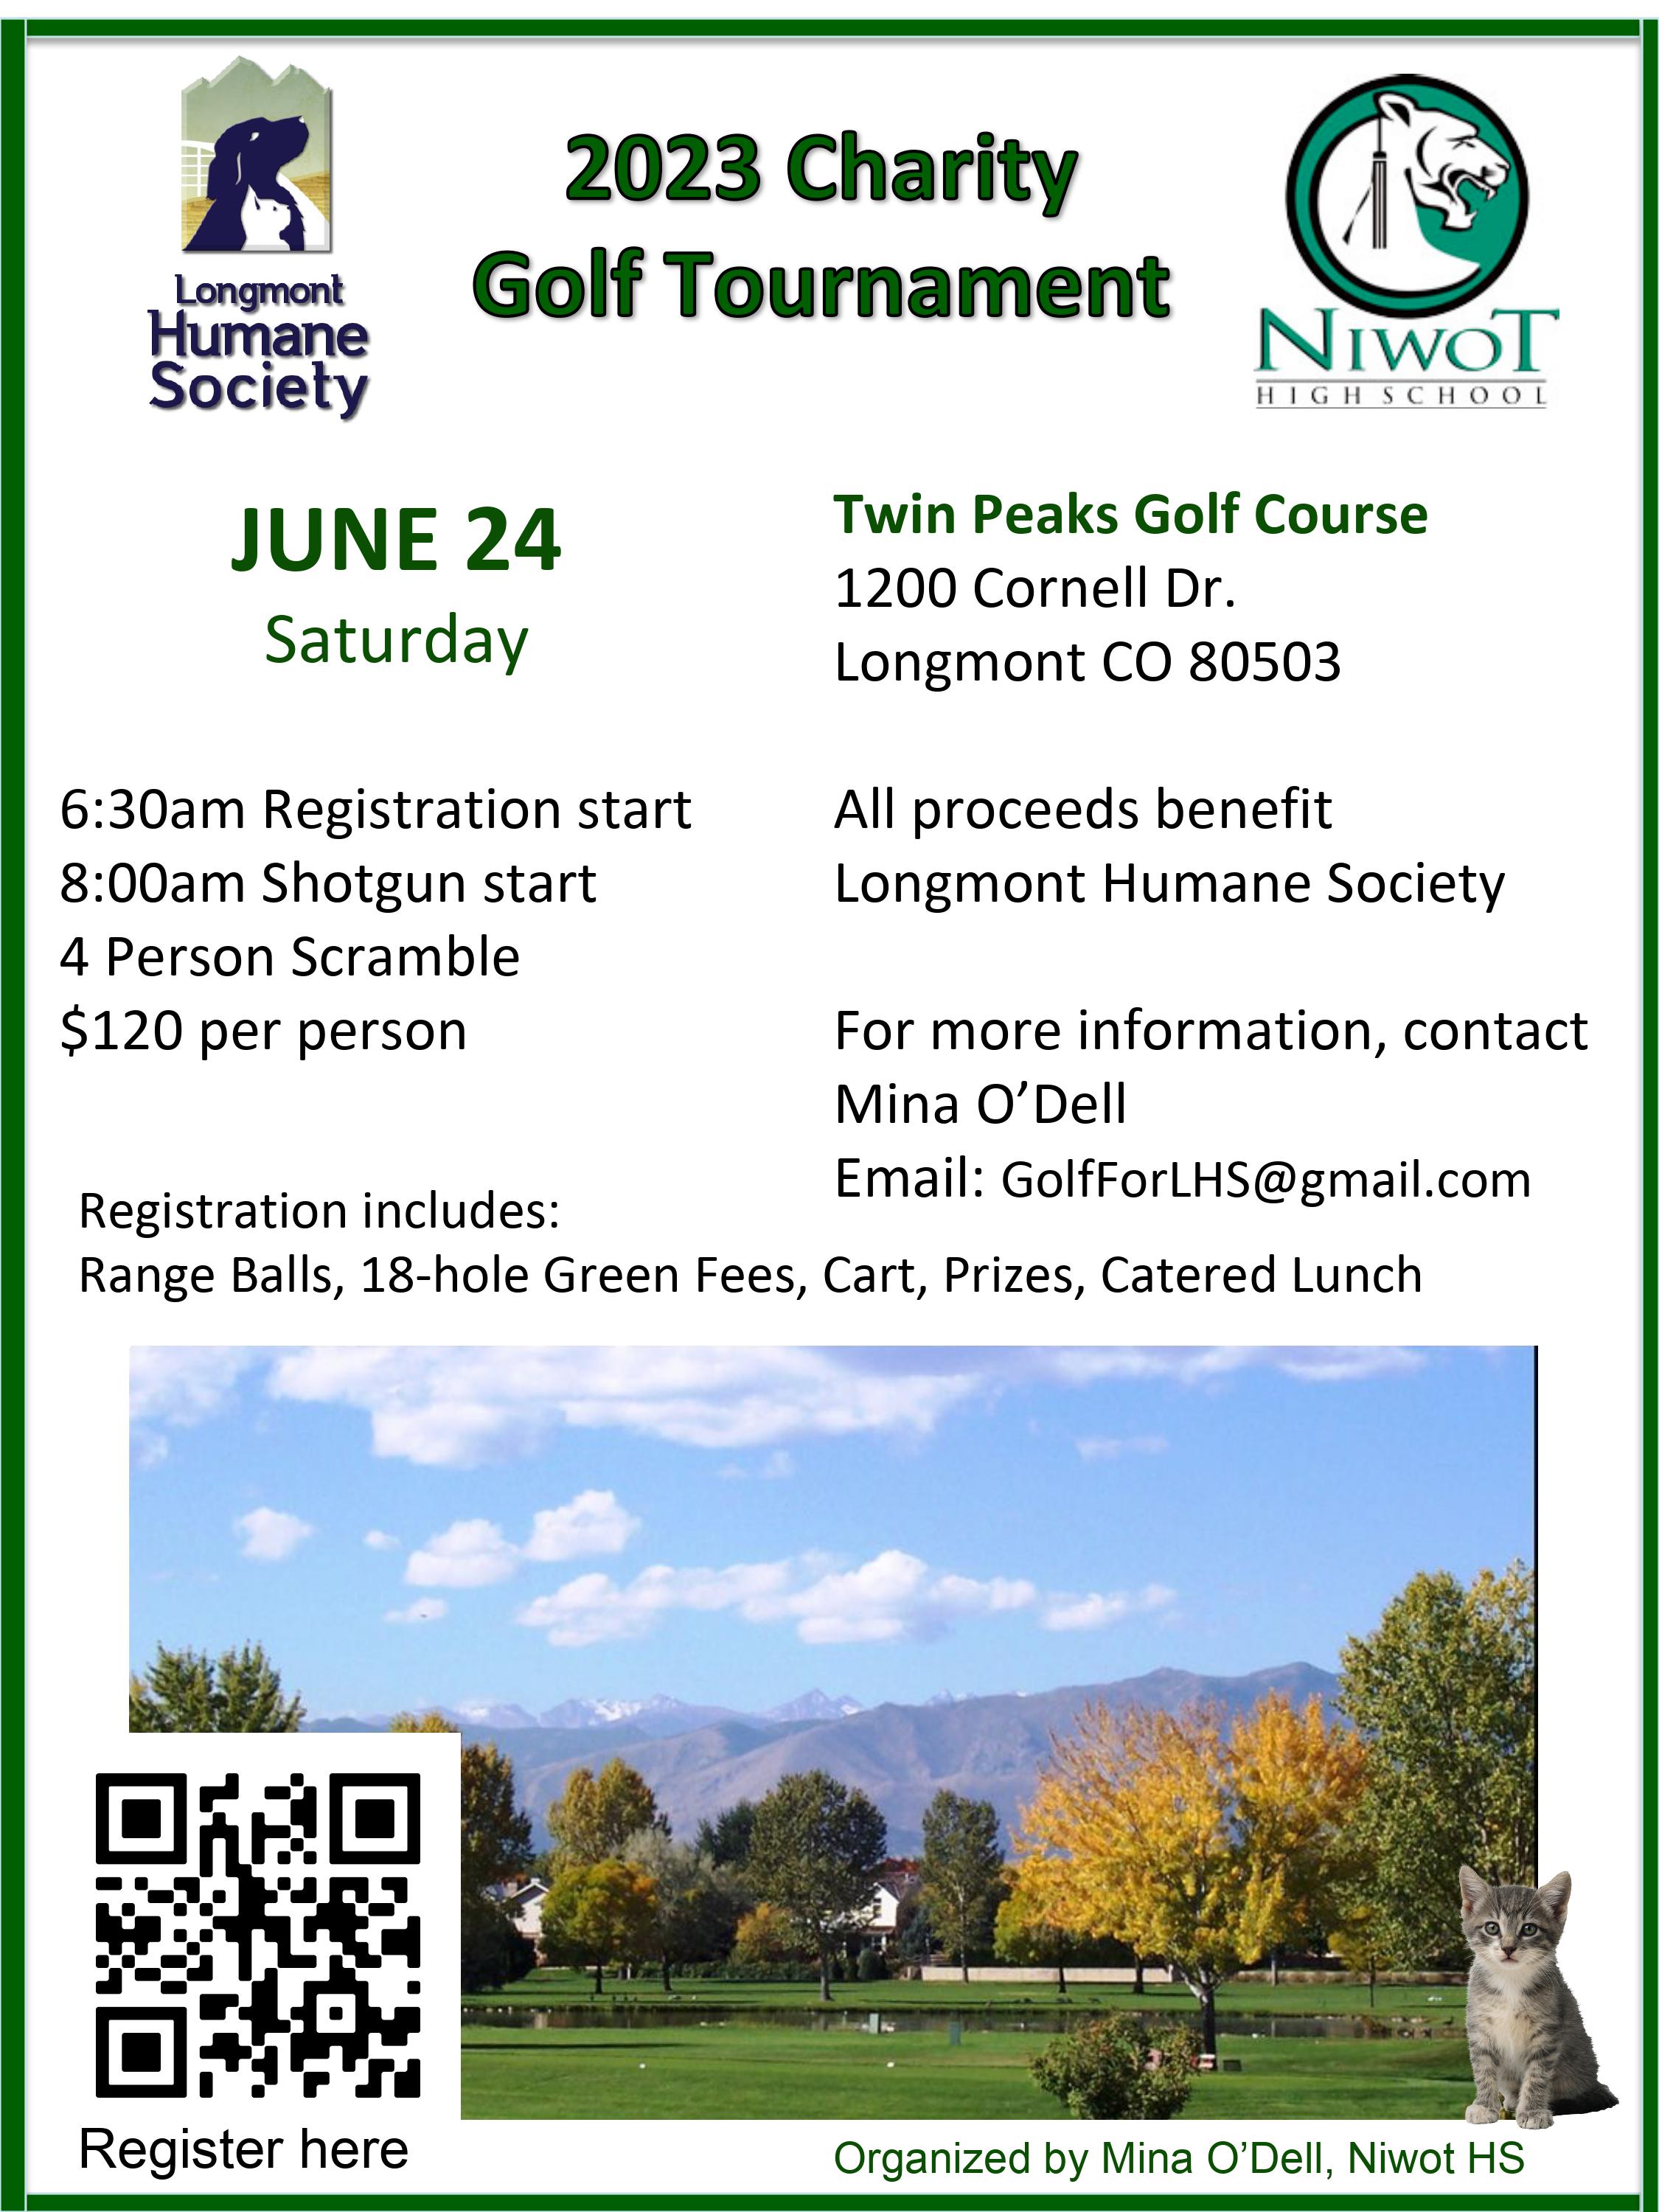 2023 Charity Golf Tournament benefitting Longmont Humane Society